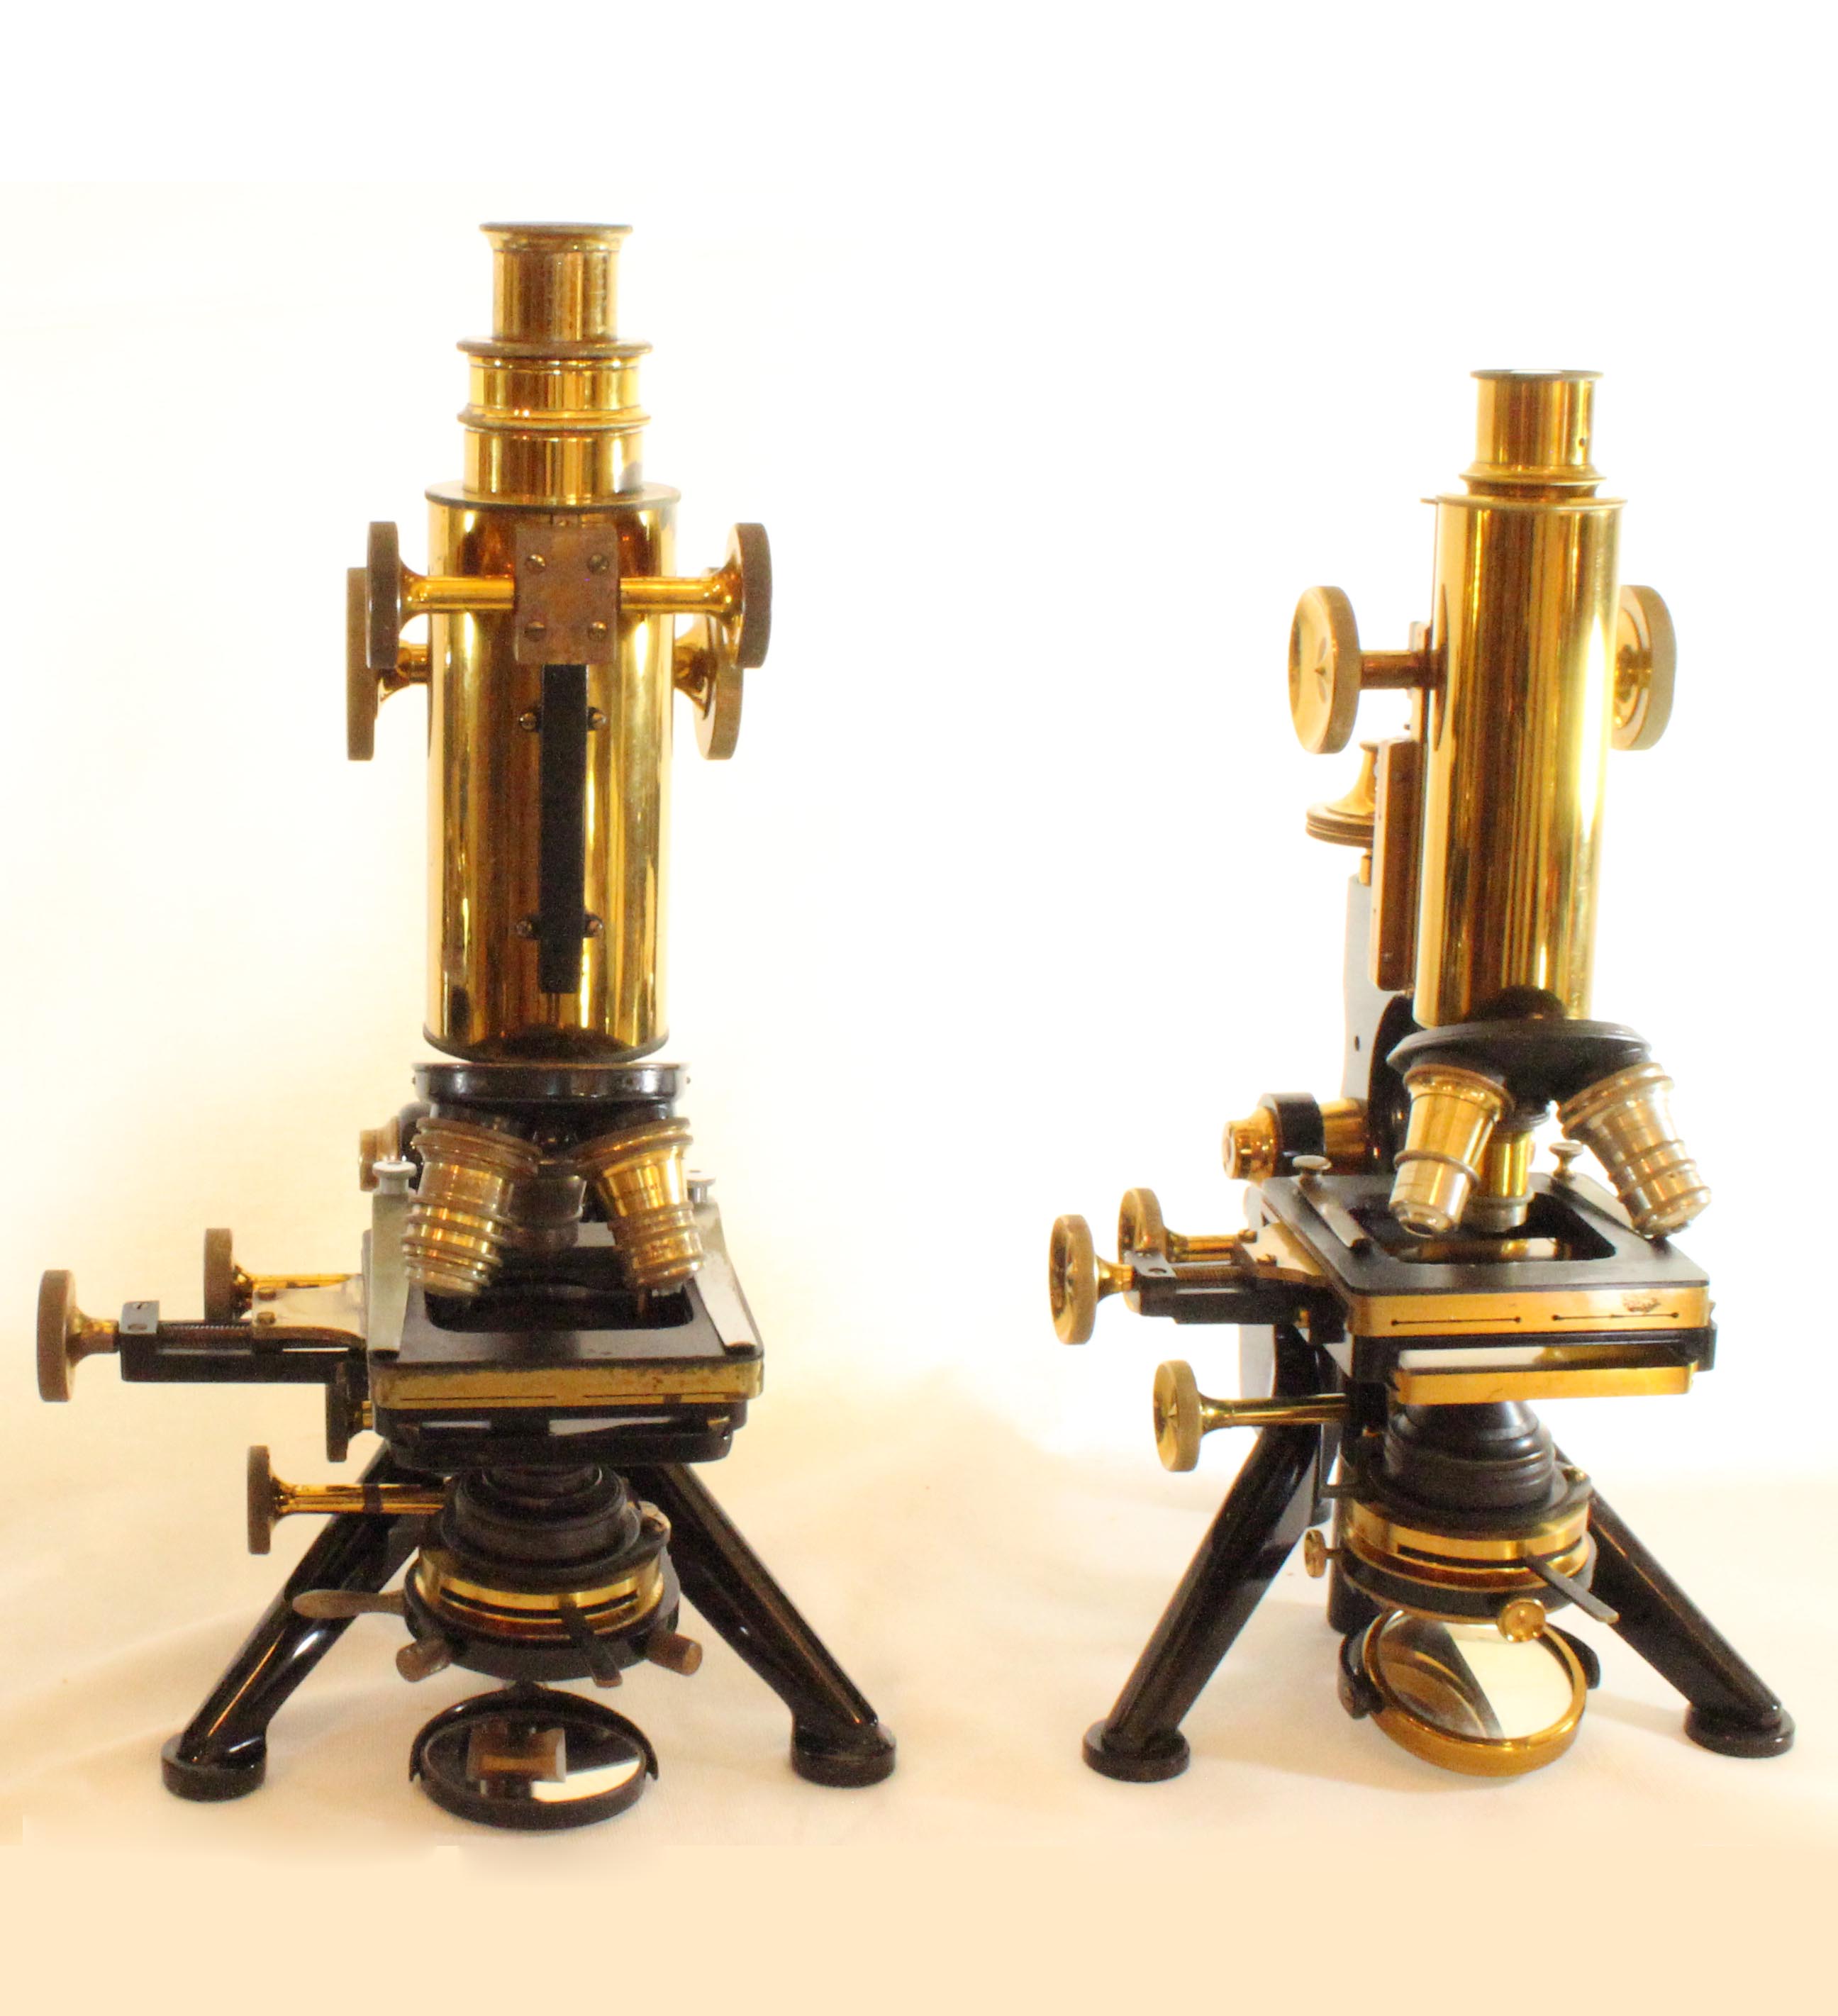 Edinburgh Model H and Royal microscopes